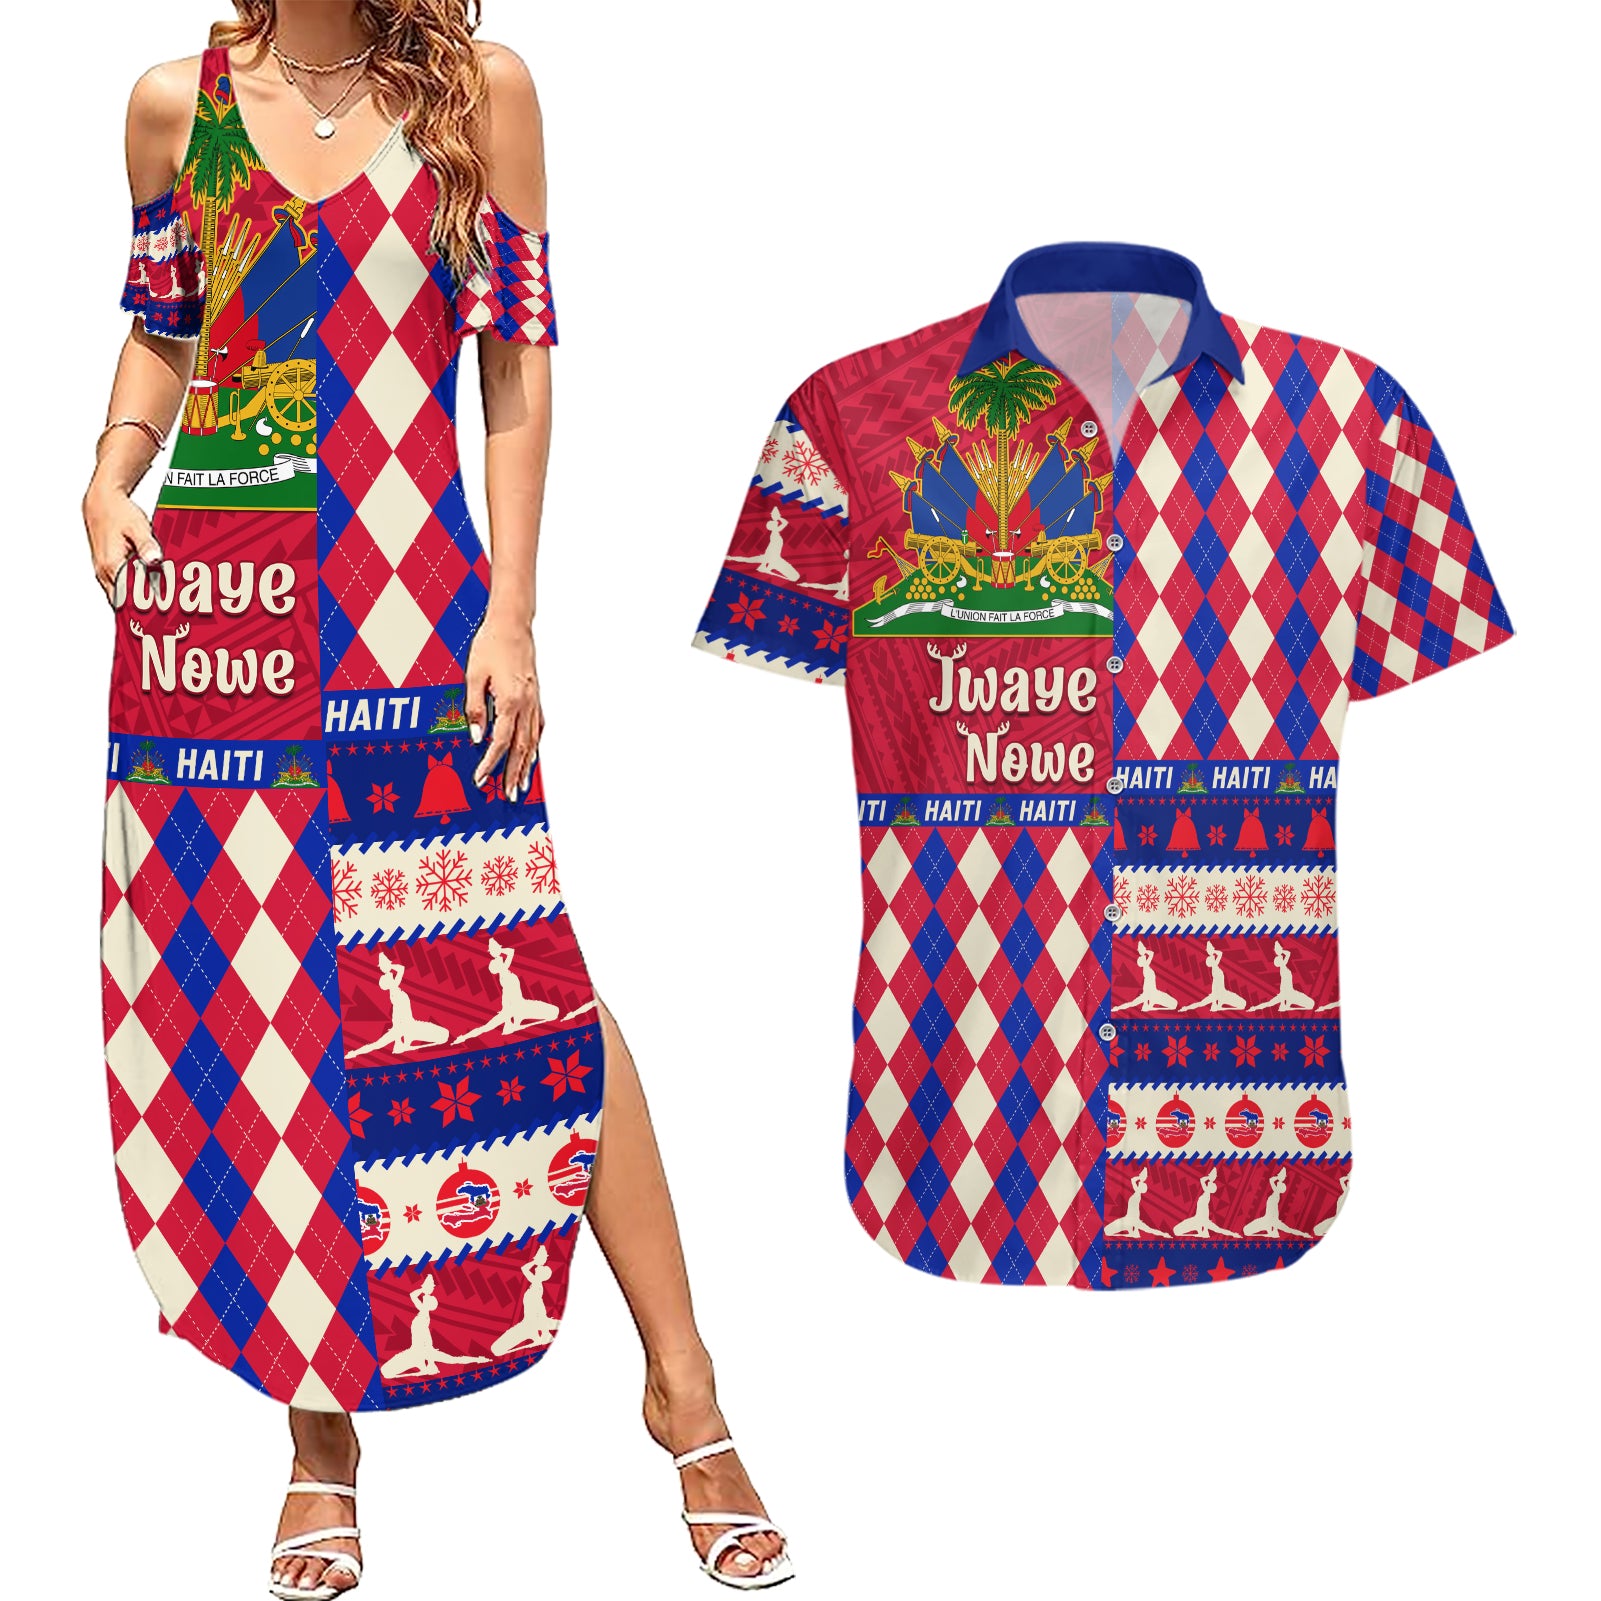 haiti-christmas-couples-matching-summer-maxi-dress-and-hawaiian-shirt-jwaye-nowe-2023-with-coat-of-arms